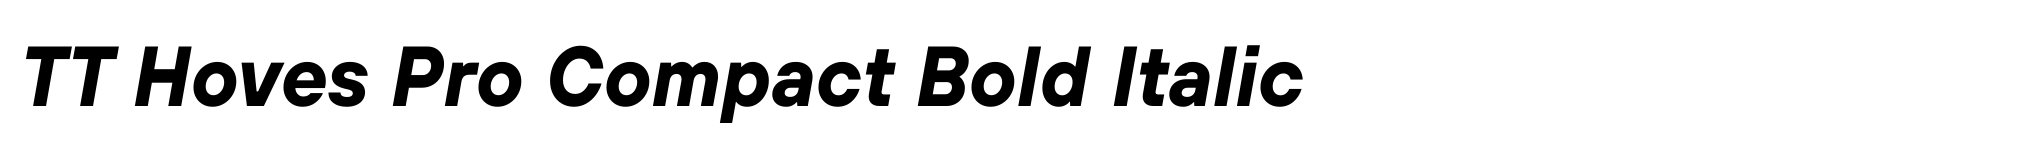 TT Hoves Pro Compact Bold Italic image